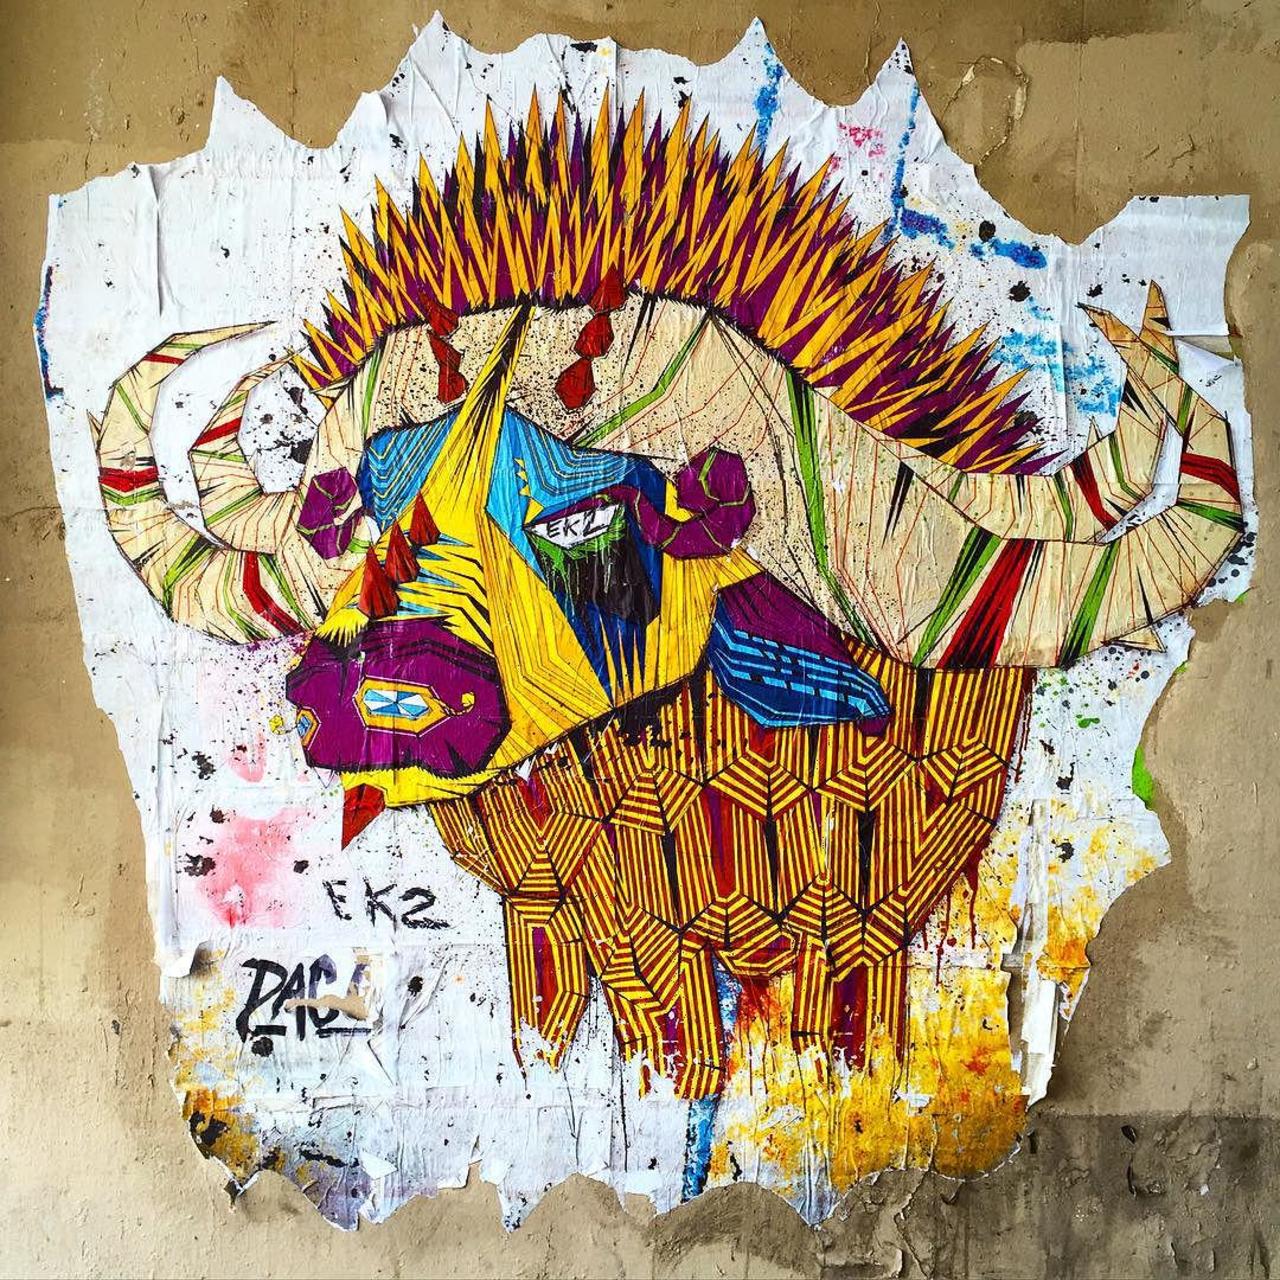 circumjacent_fr: #Paris #graffiti photo by jeanlucr http://ift.tt/1VIaa7L #StreetArt http://t.co/2ZRFJ6lgvh